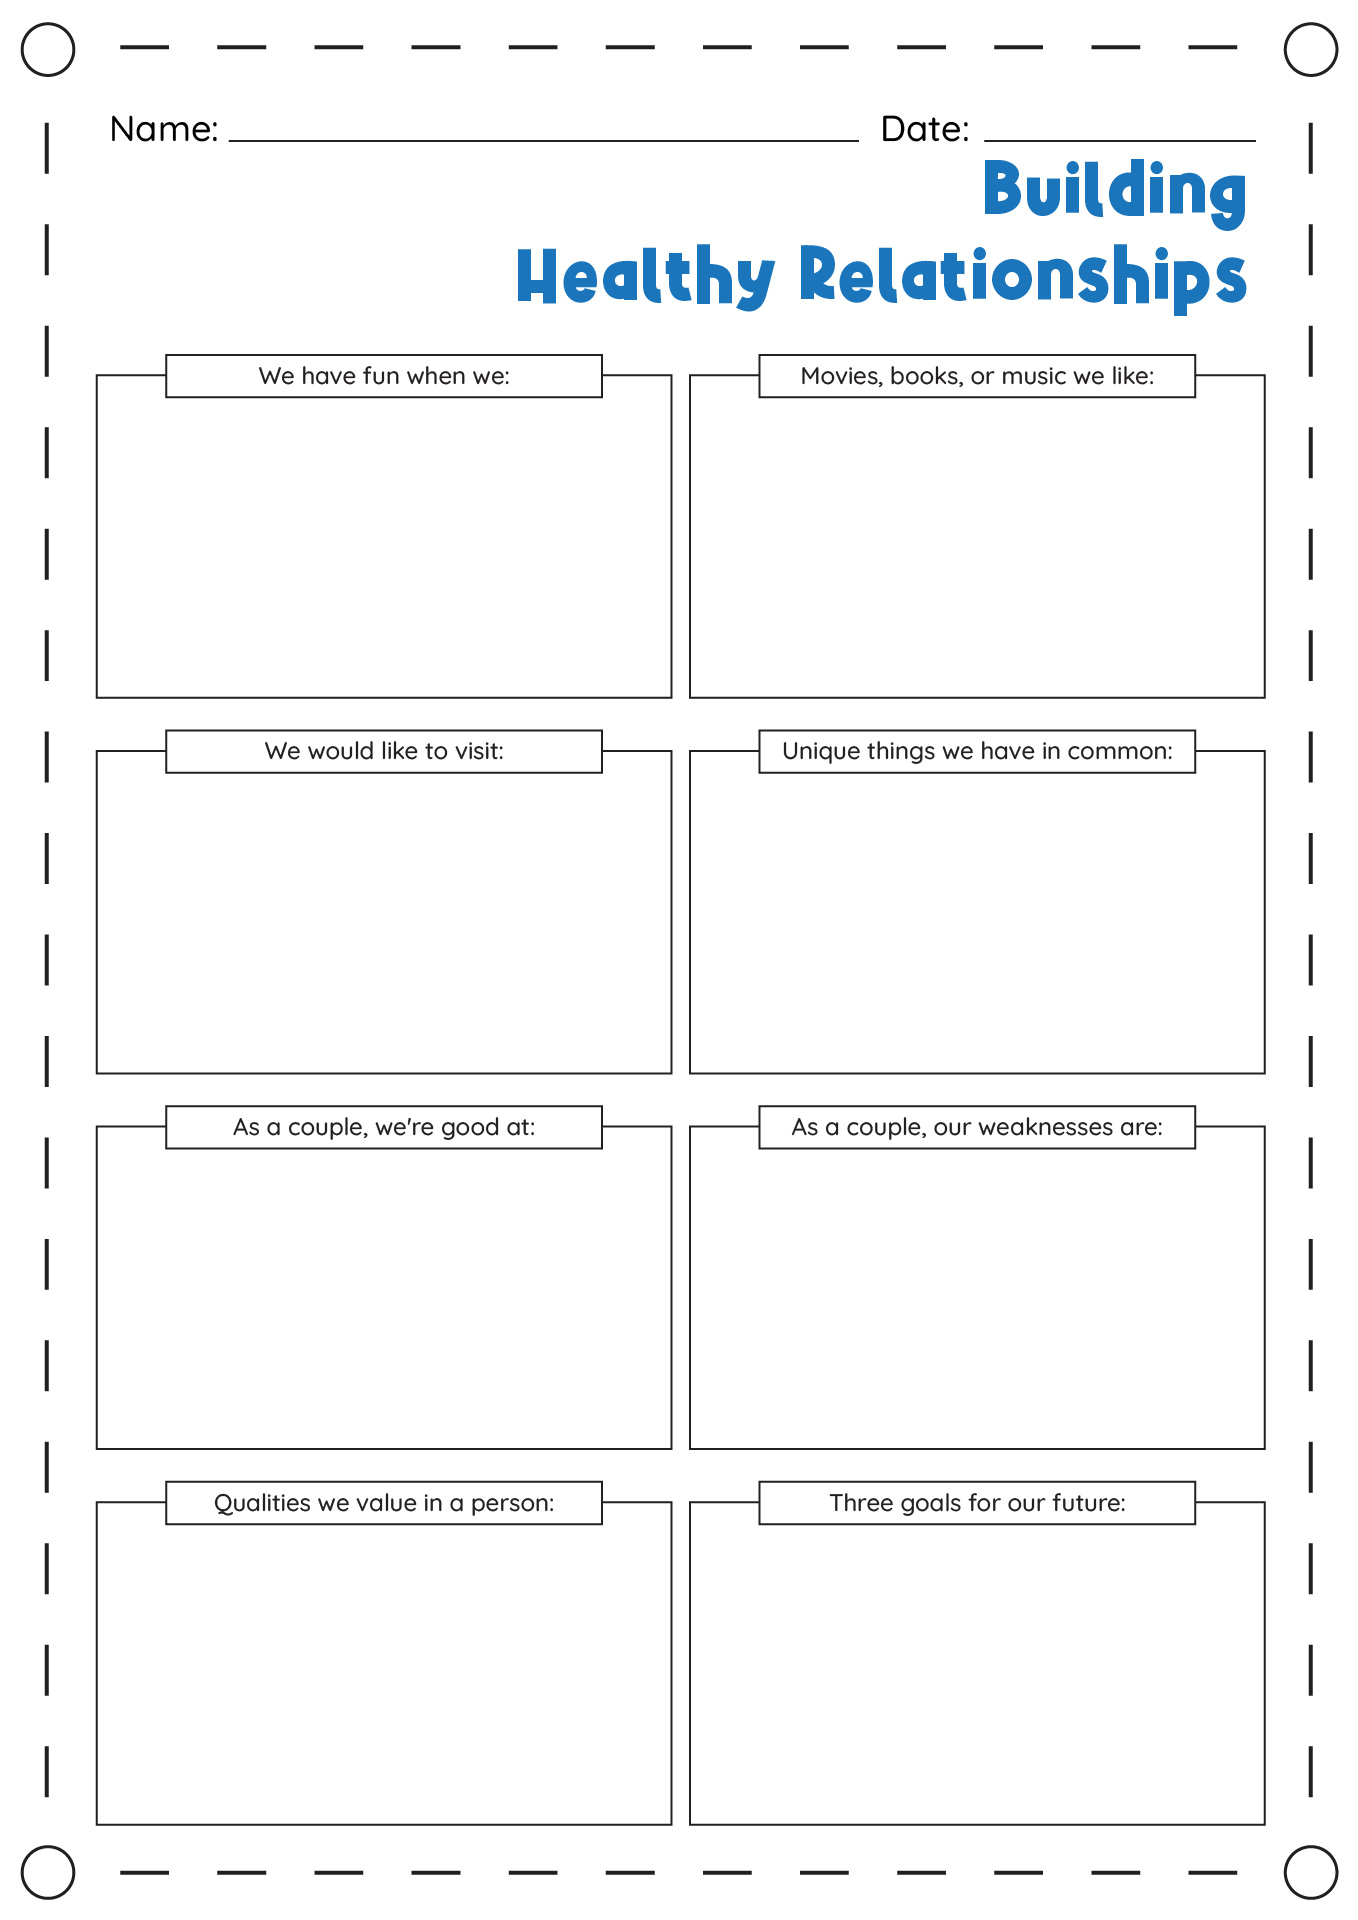 Building Healthy Relationships Worksheets